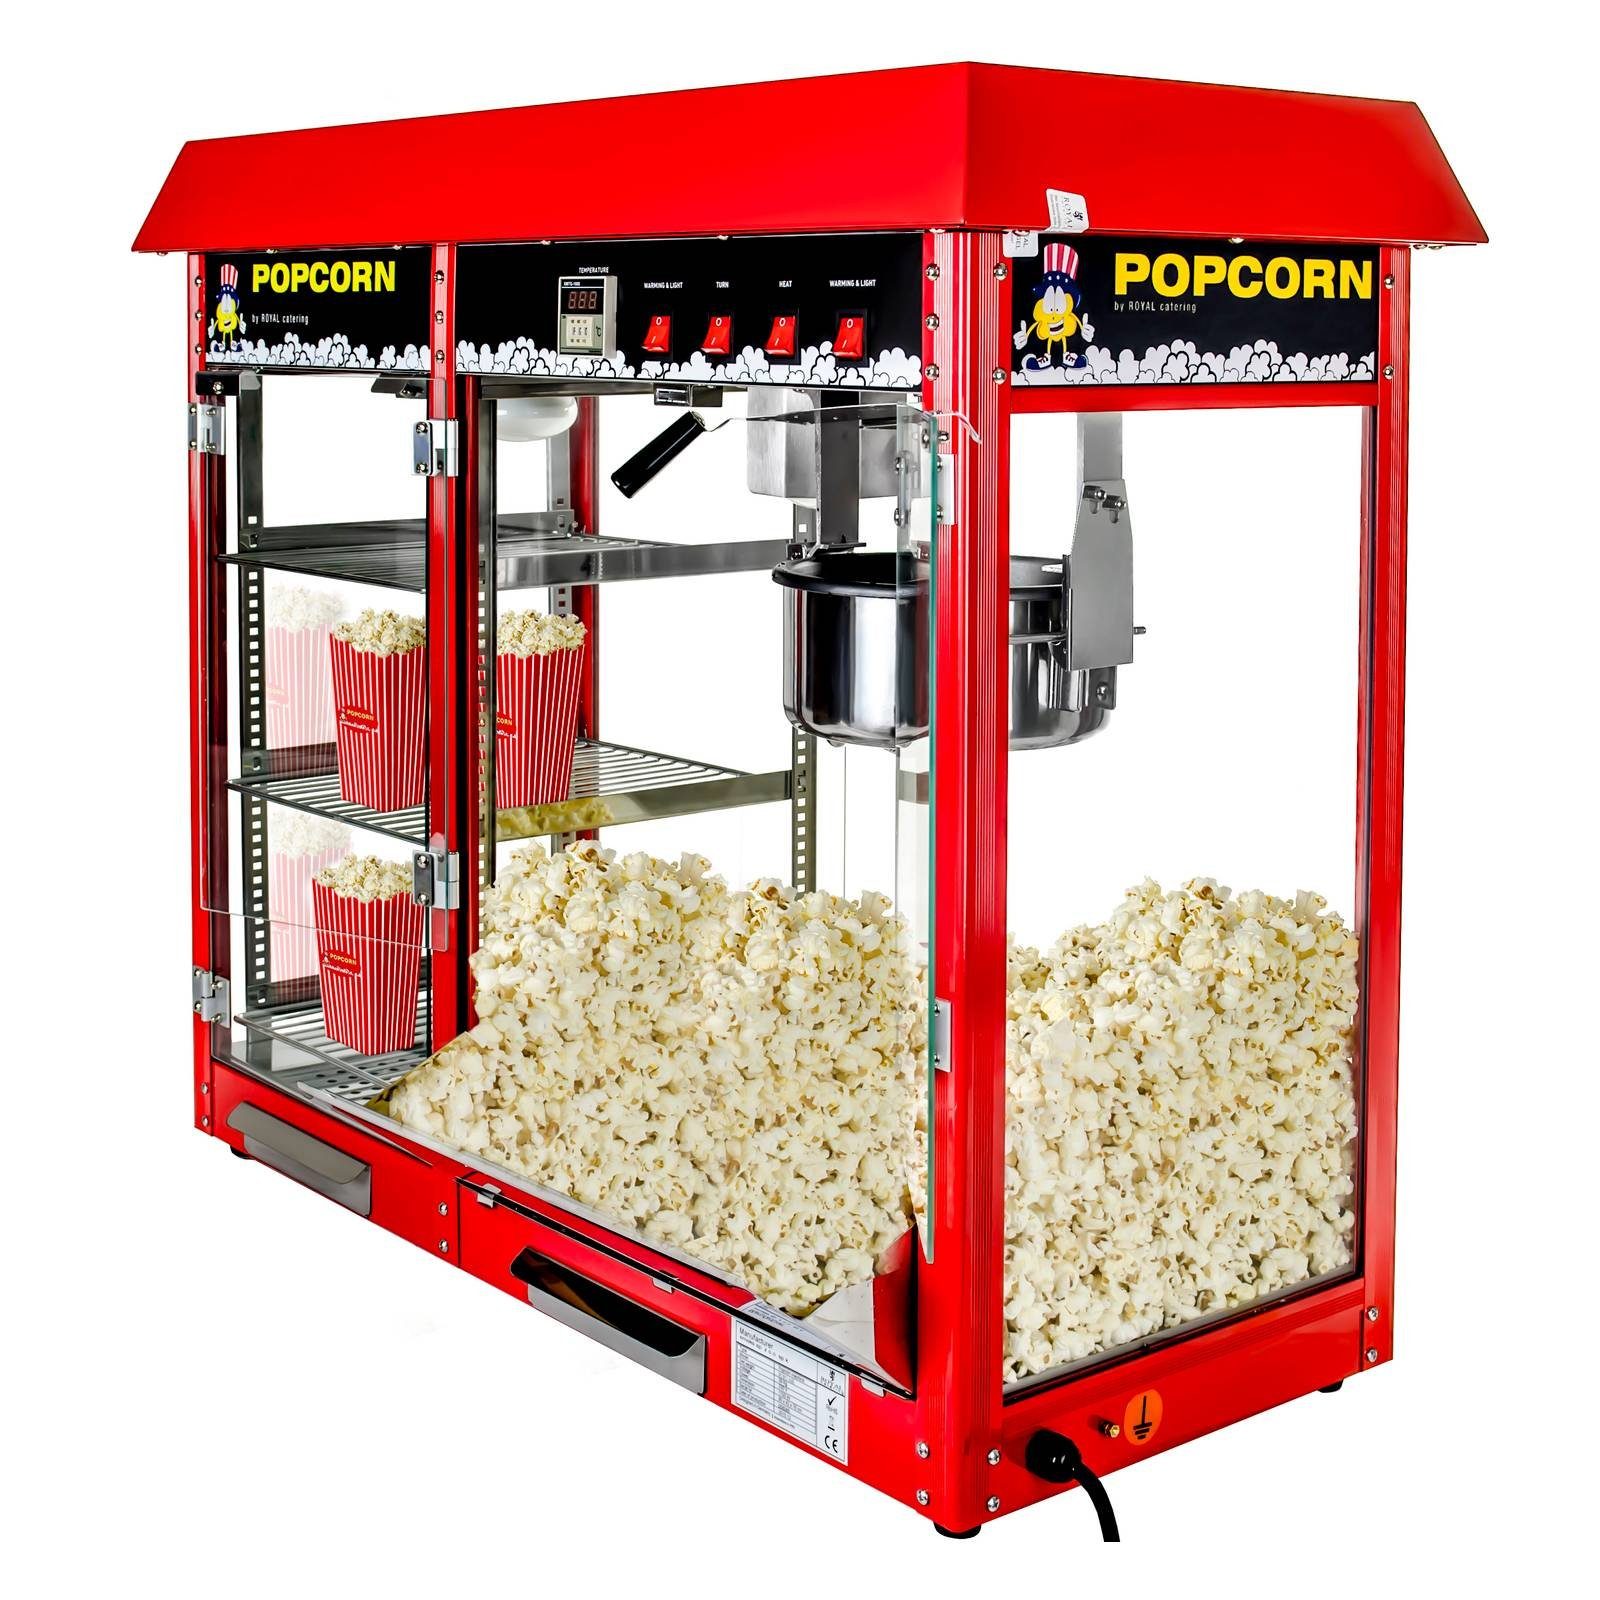 Royal Catering Popcornmaschine Popcornmaschine Popcornmaker Popcornautomat 1700W 5kg/h beheizte